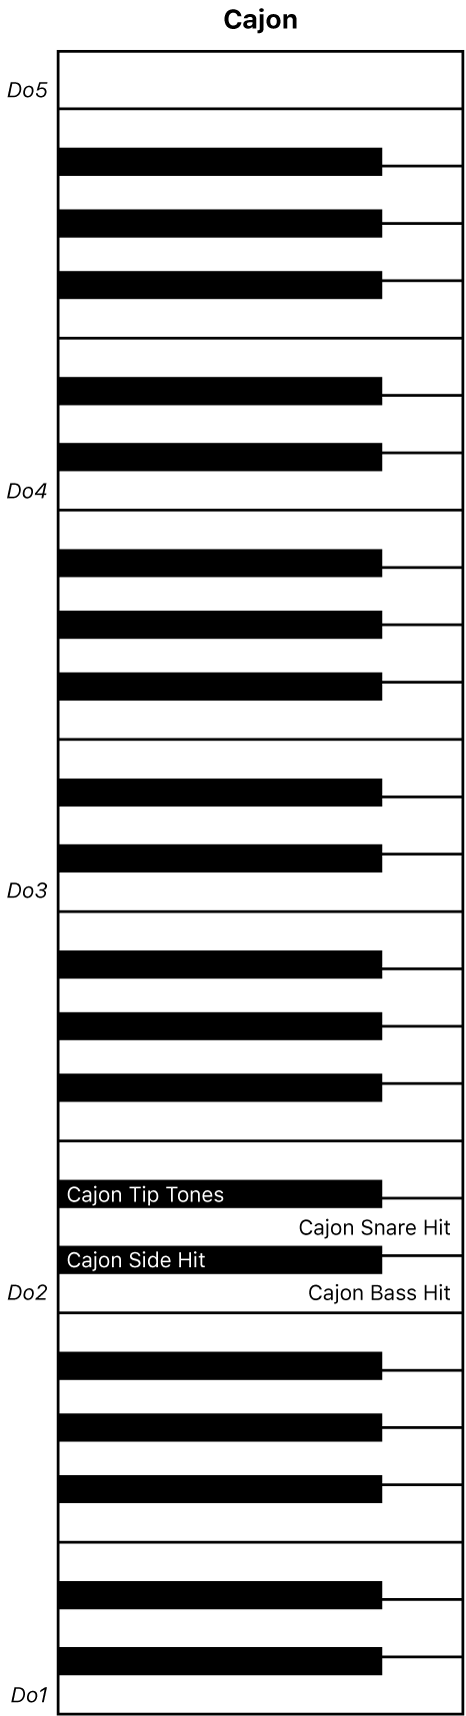 Figure Plan du clavier de performance Cajon.